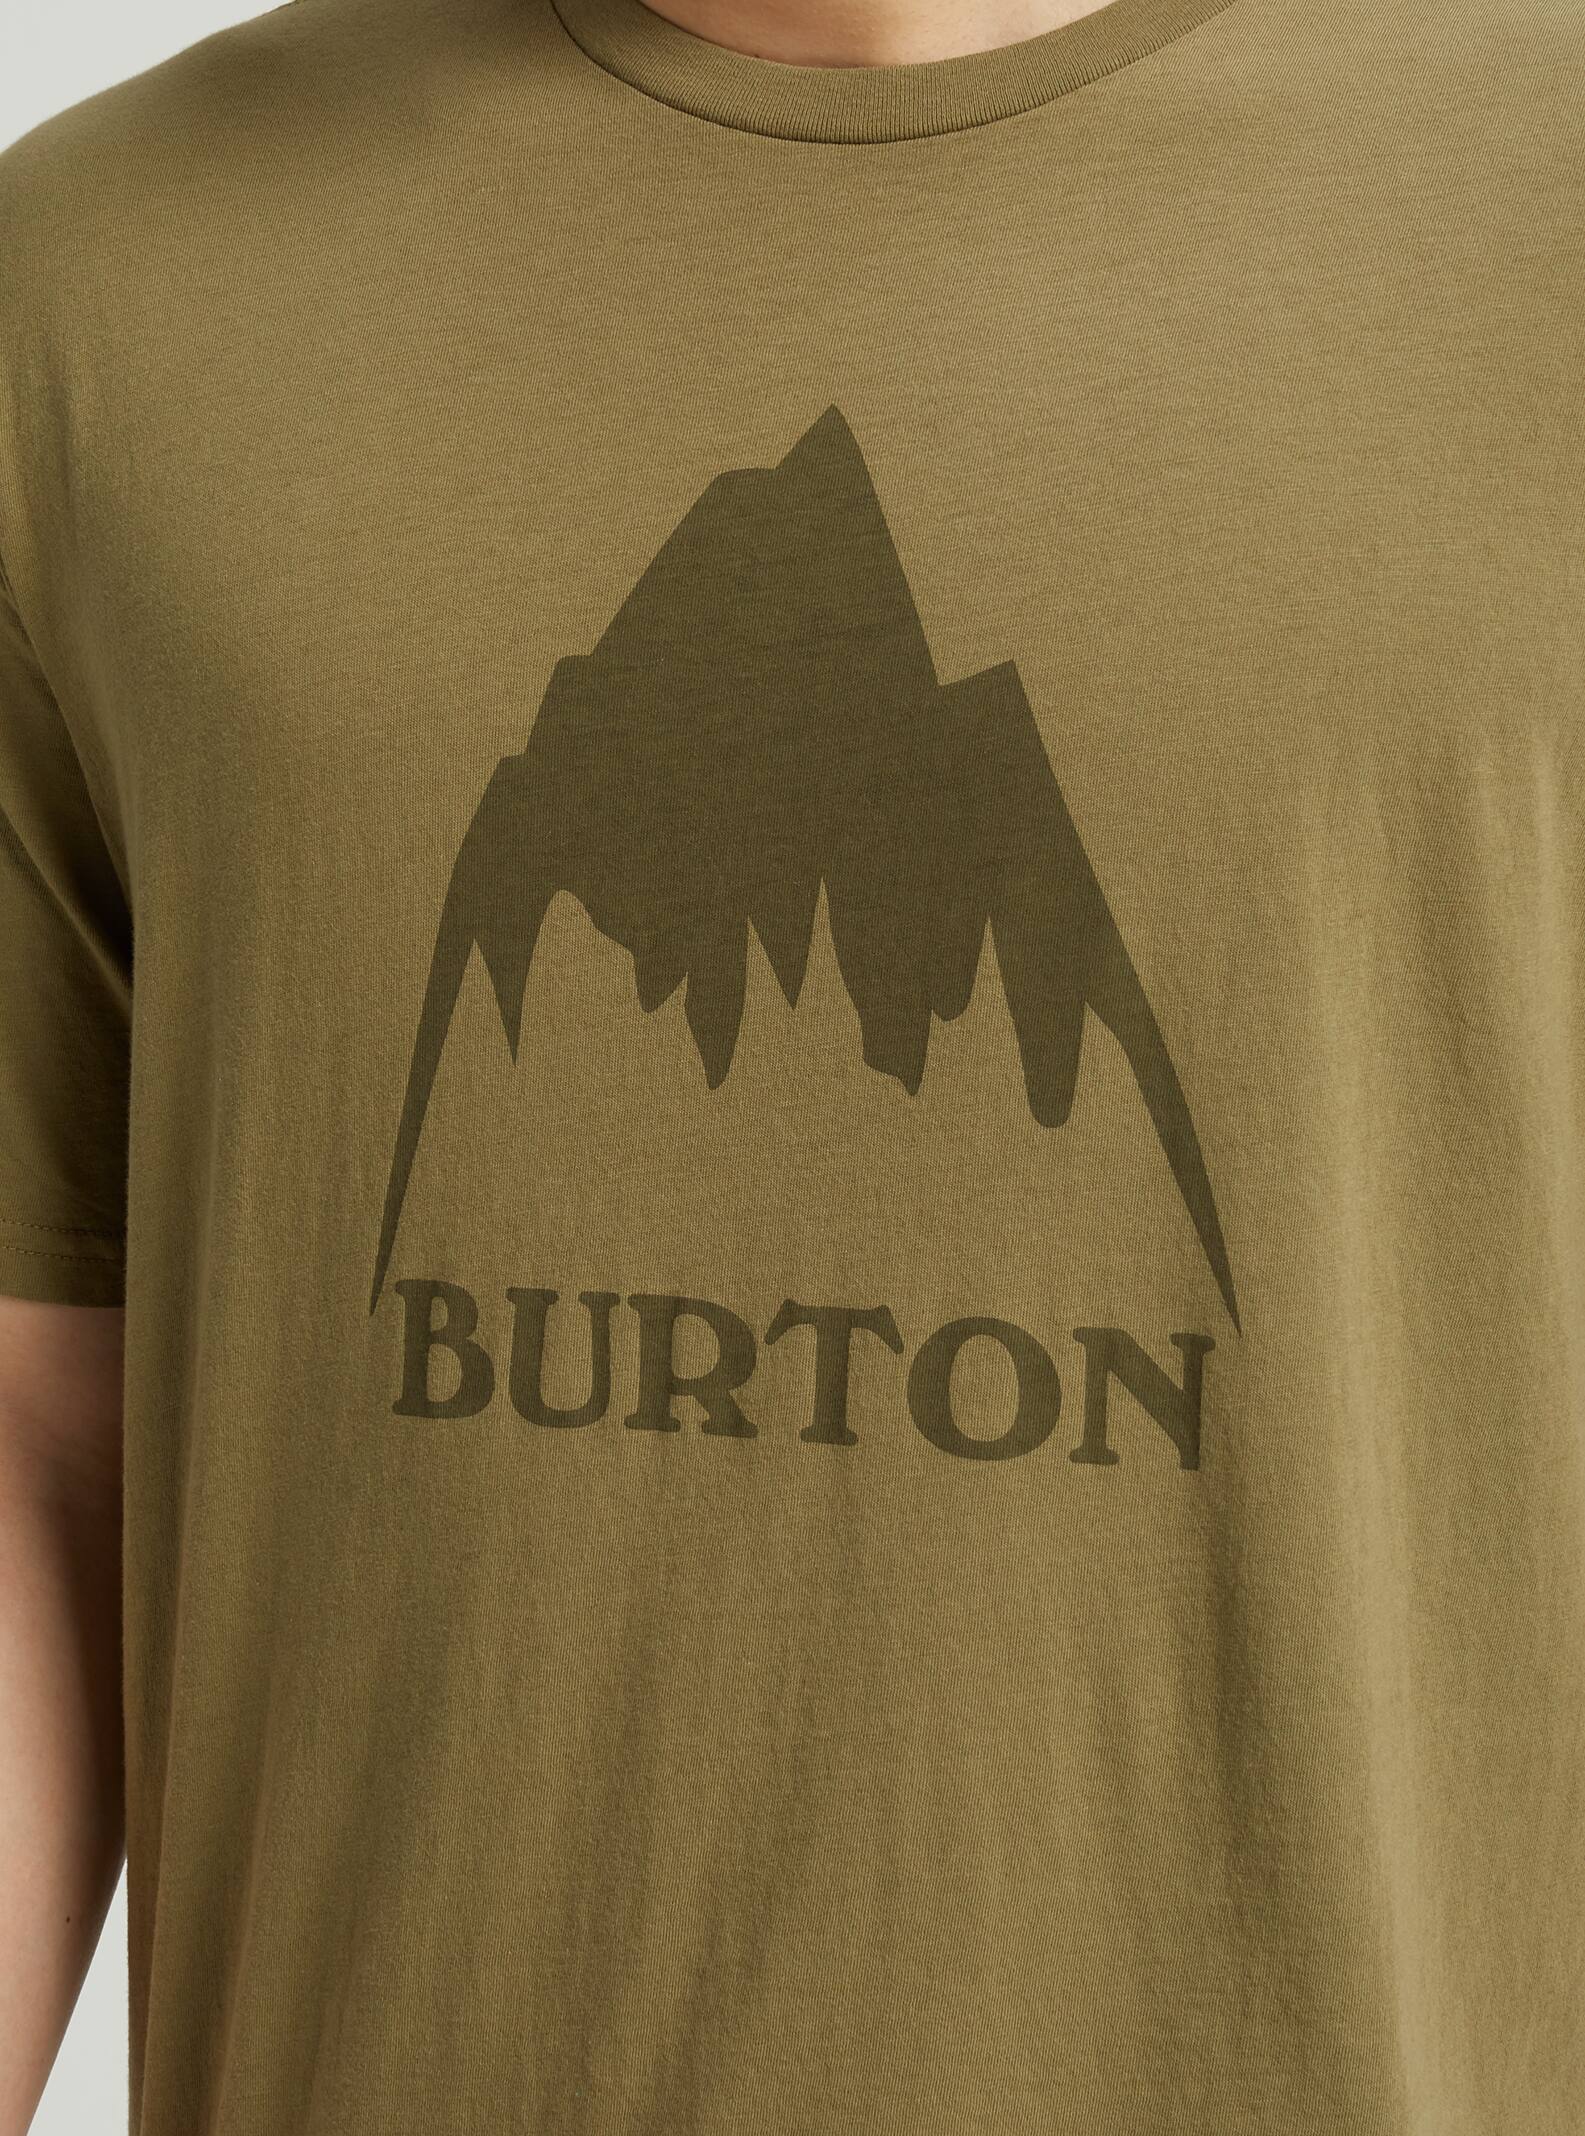 Burton Classic Mountain High Camiseta Unisex niños